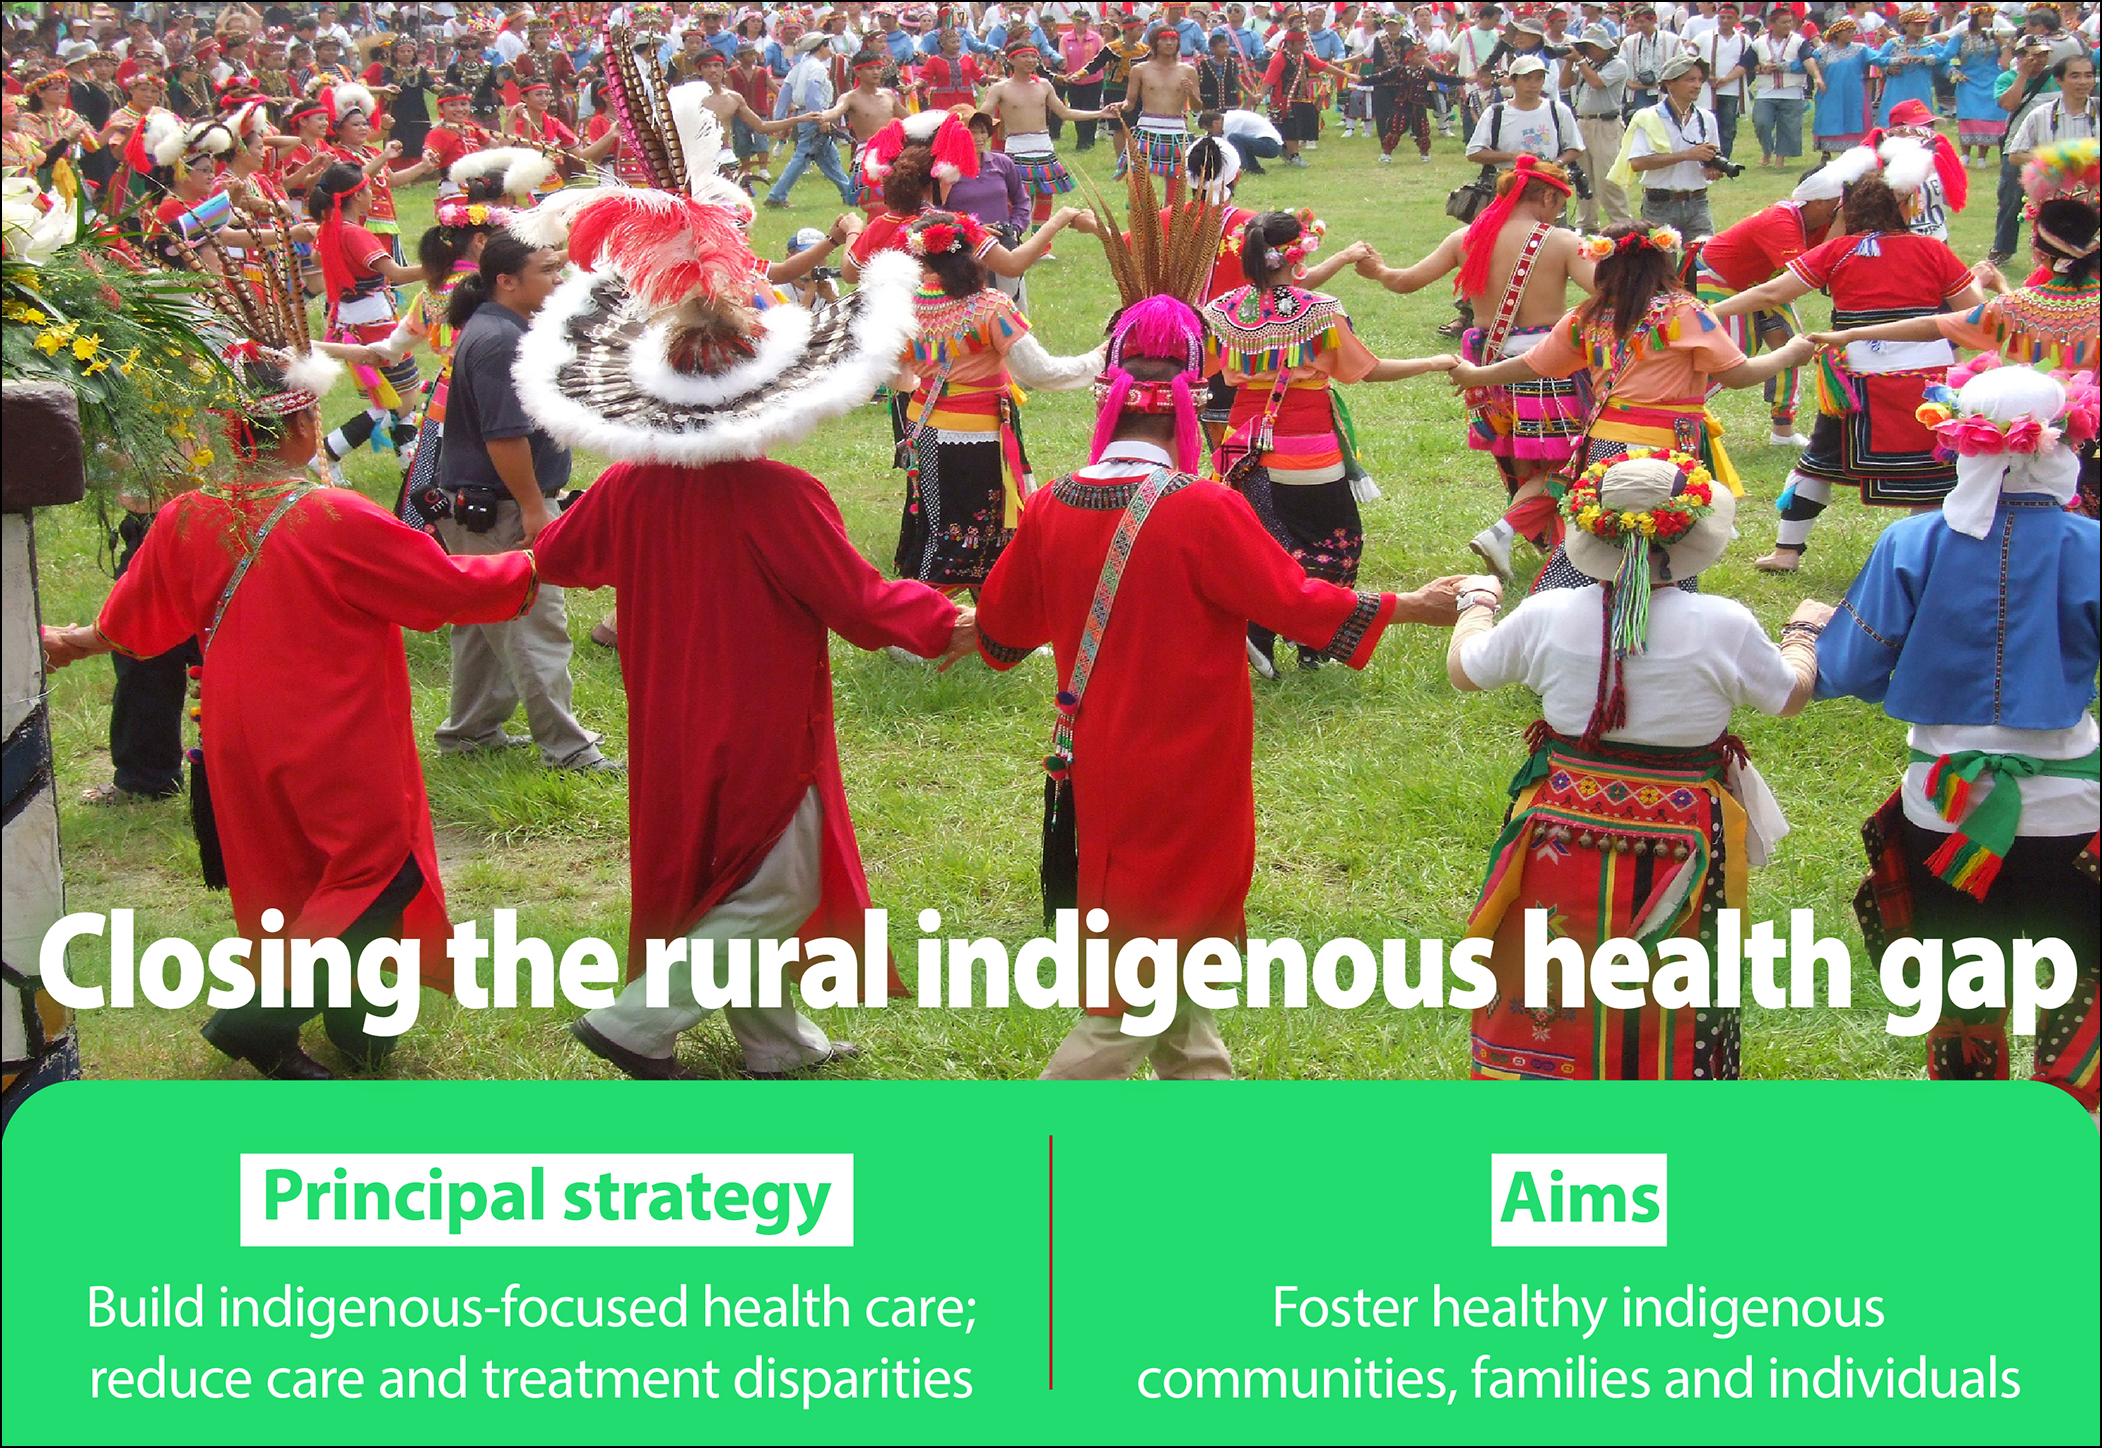 Closing the health gap for rural indigenous communities